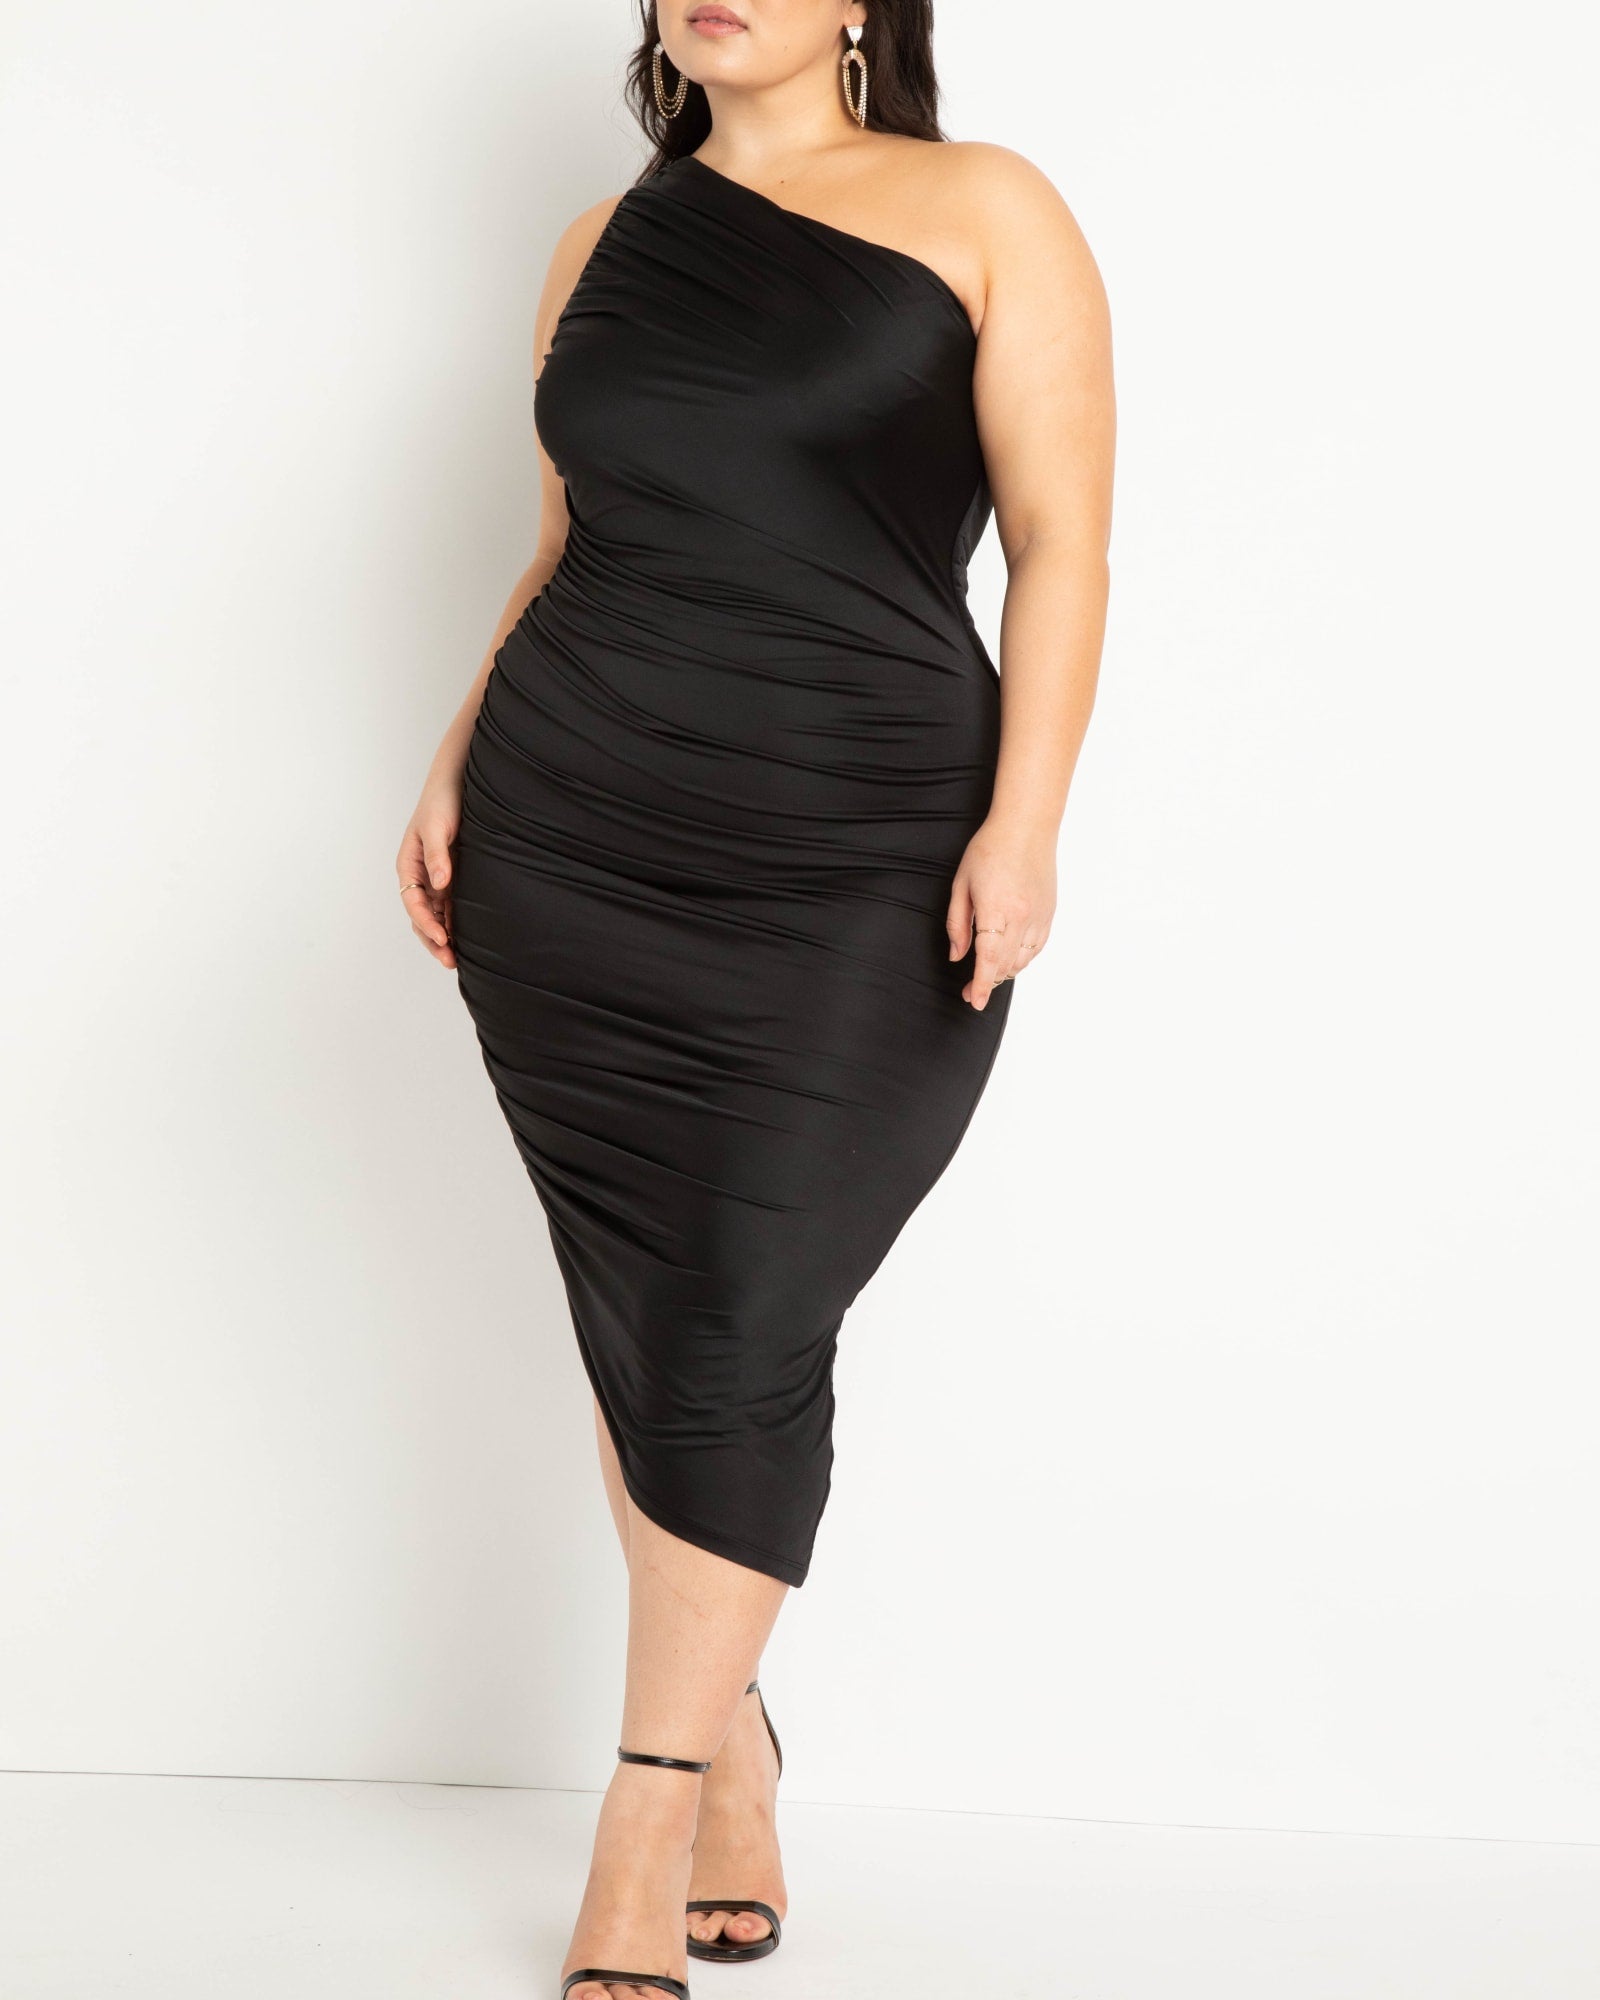 Black Plus Size One Shoulder Dress